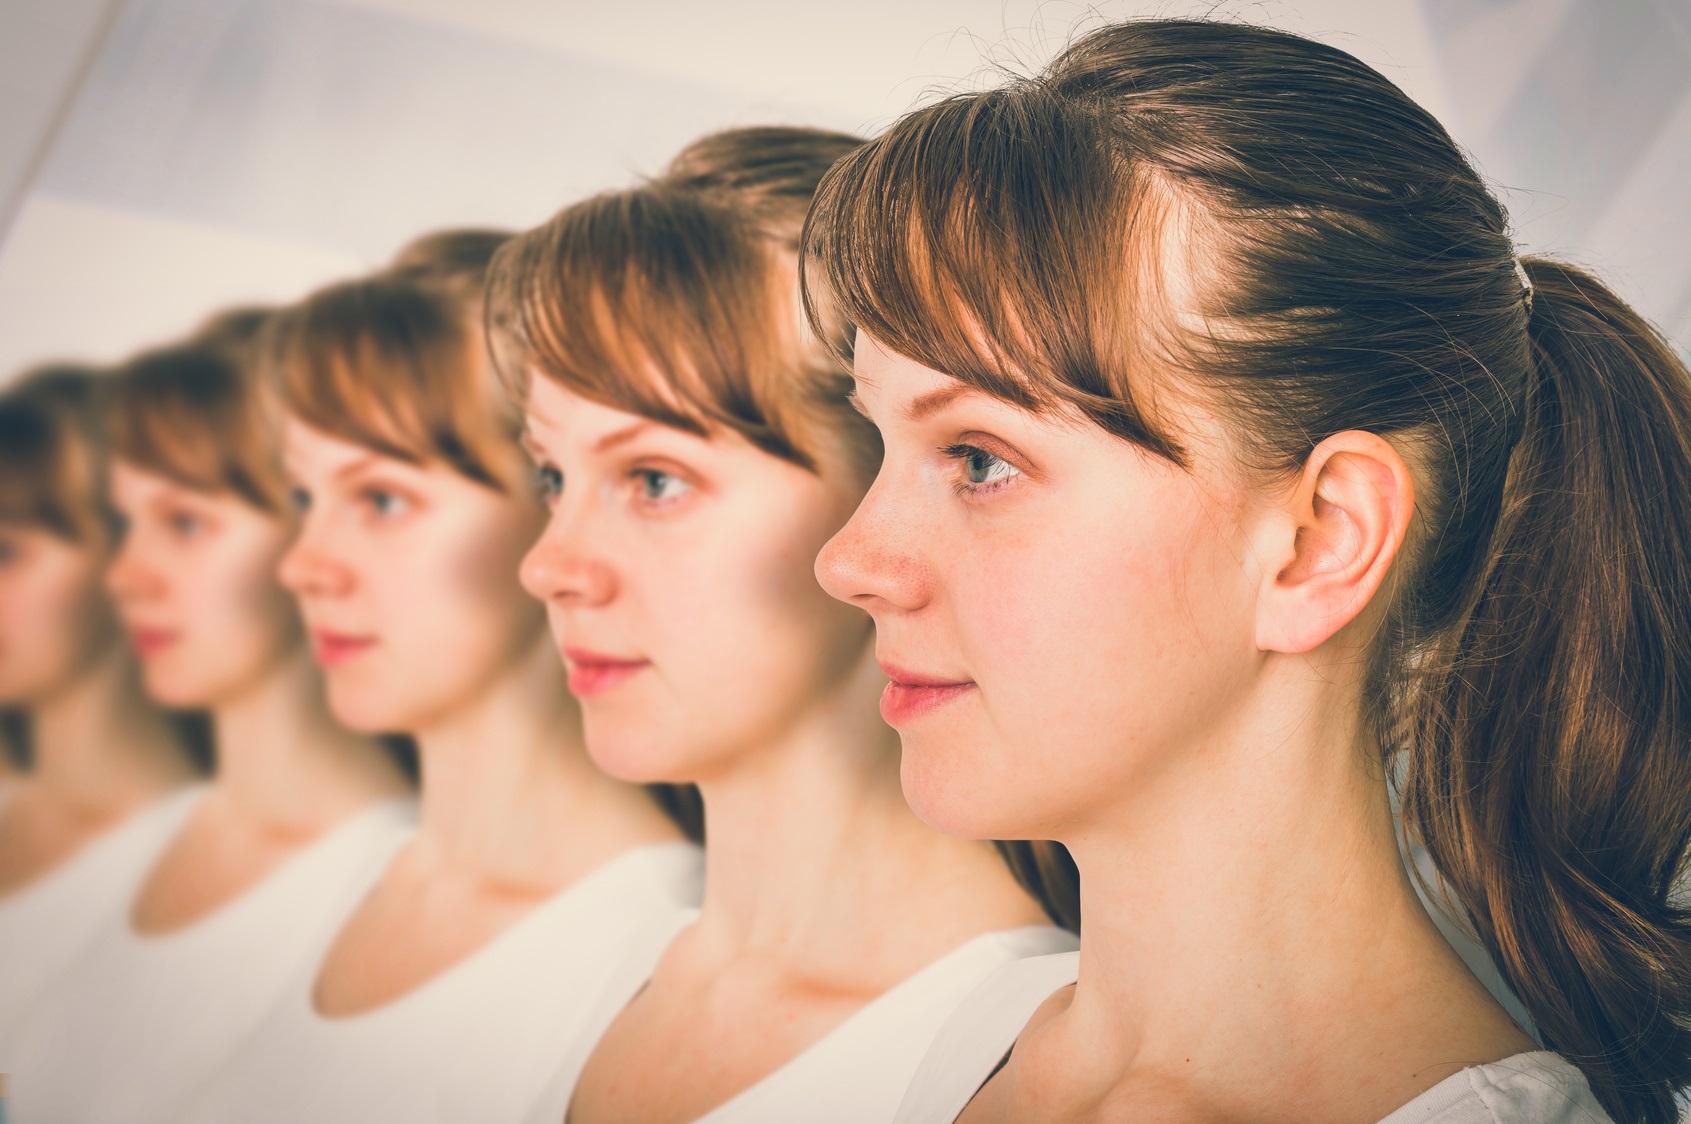 Le clonage permet d’obtenir des individus identiques. © andriano_cz, Fotolia